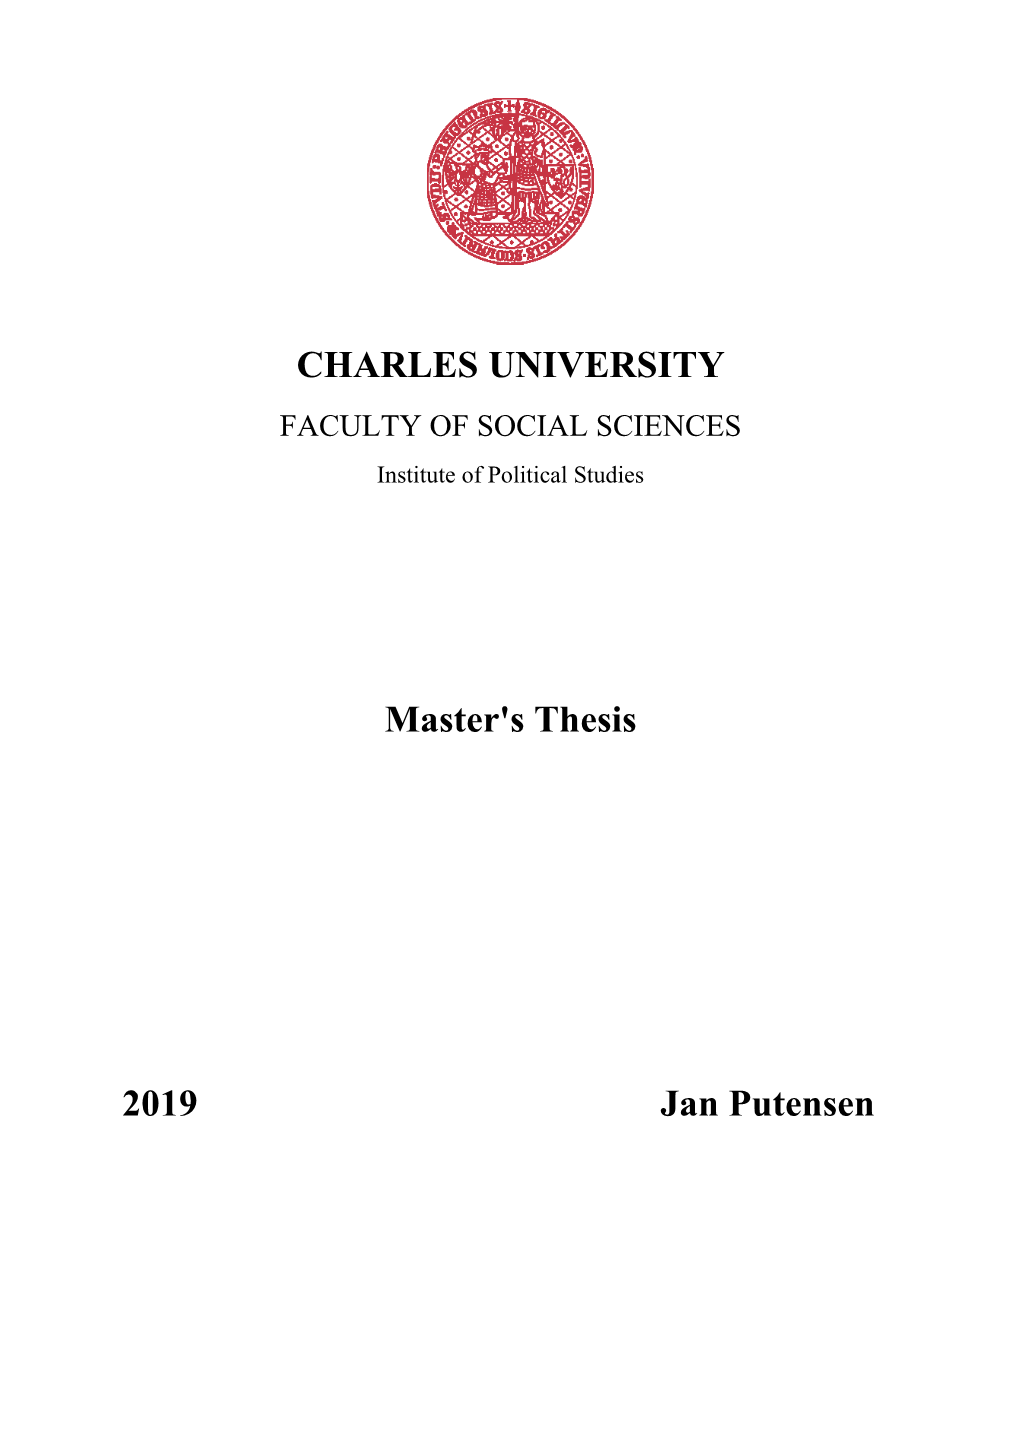 CHARLES UNIVERSITY Master's Thesis 2019 Jan Putensen